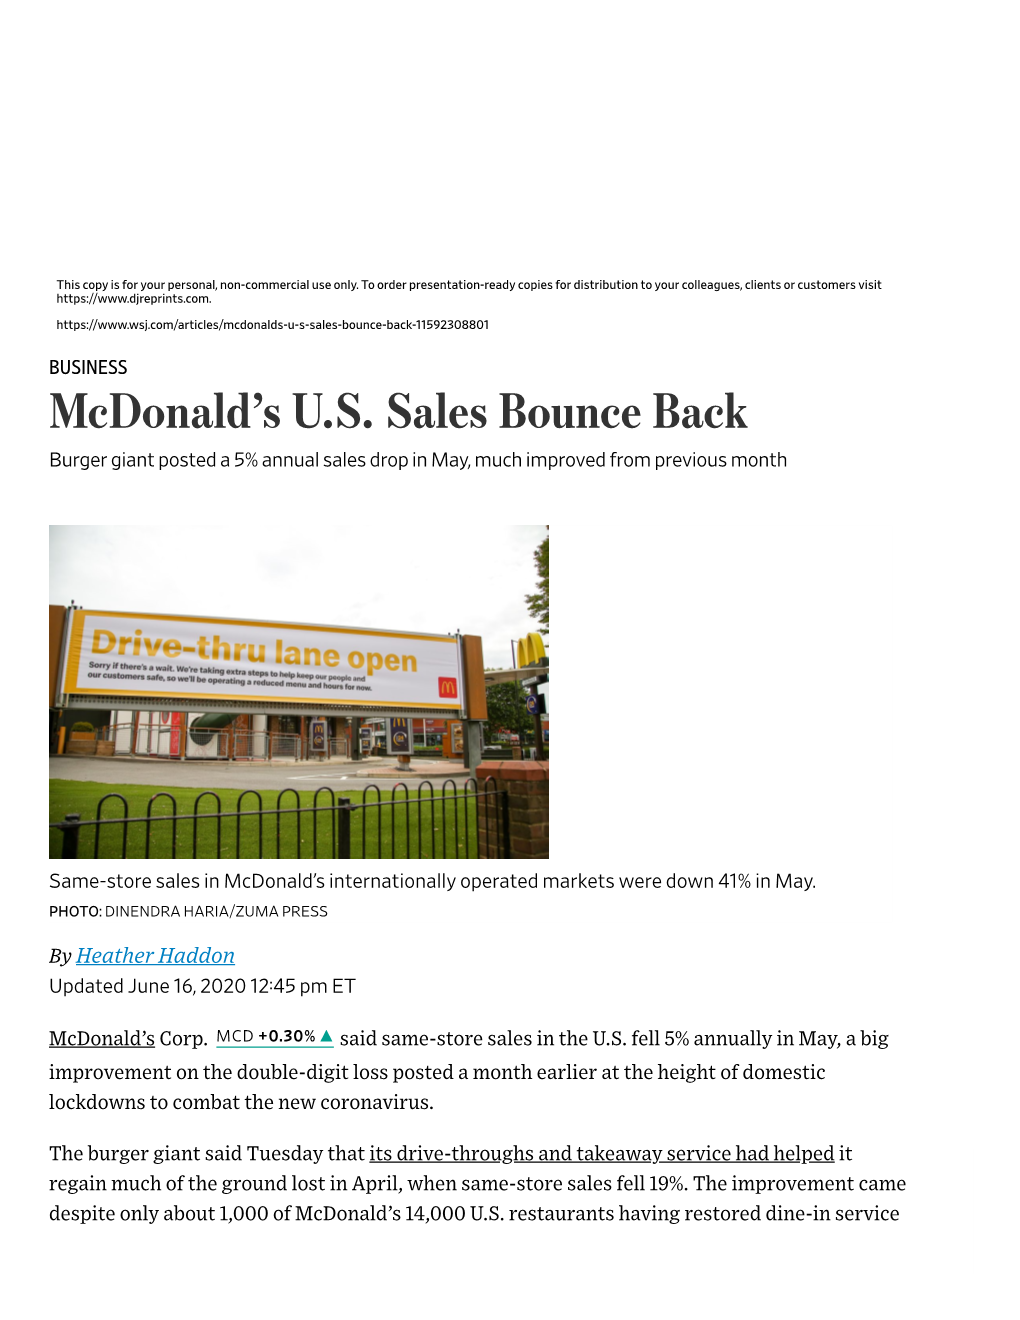 Mcdonald's US Sales Bounce Back